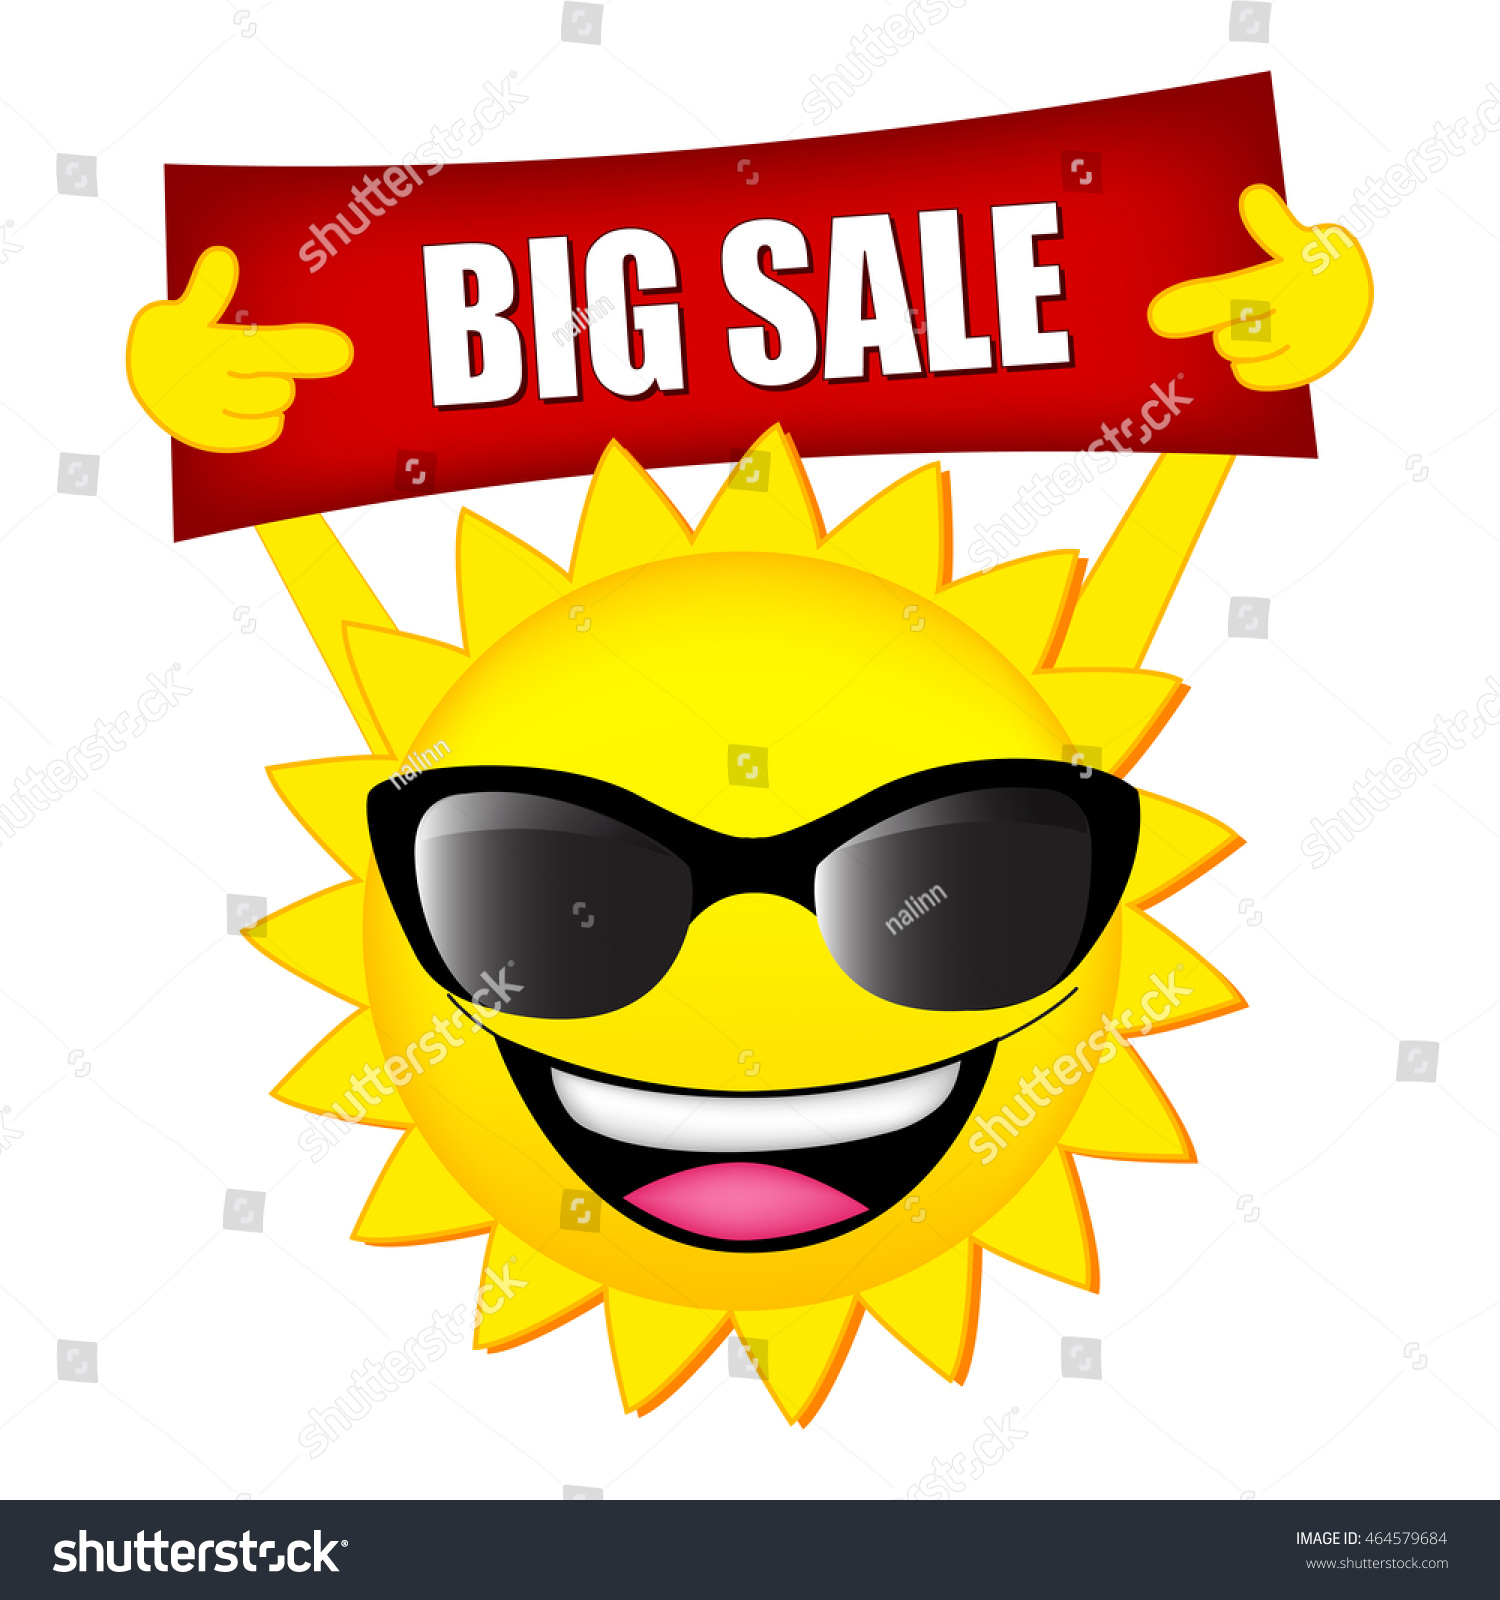 Big sale illustration with sun holding a big sale notice #464579684